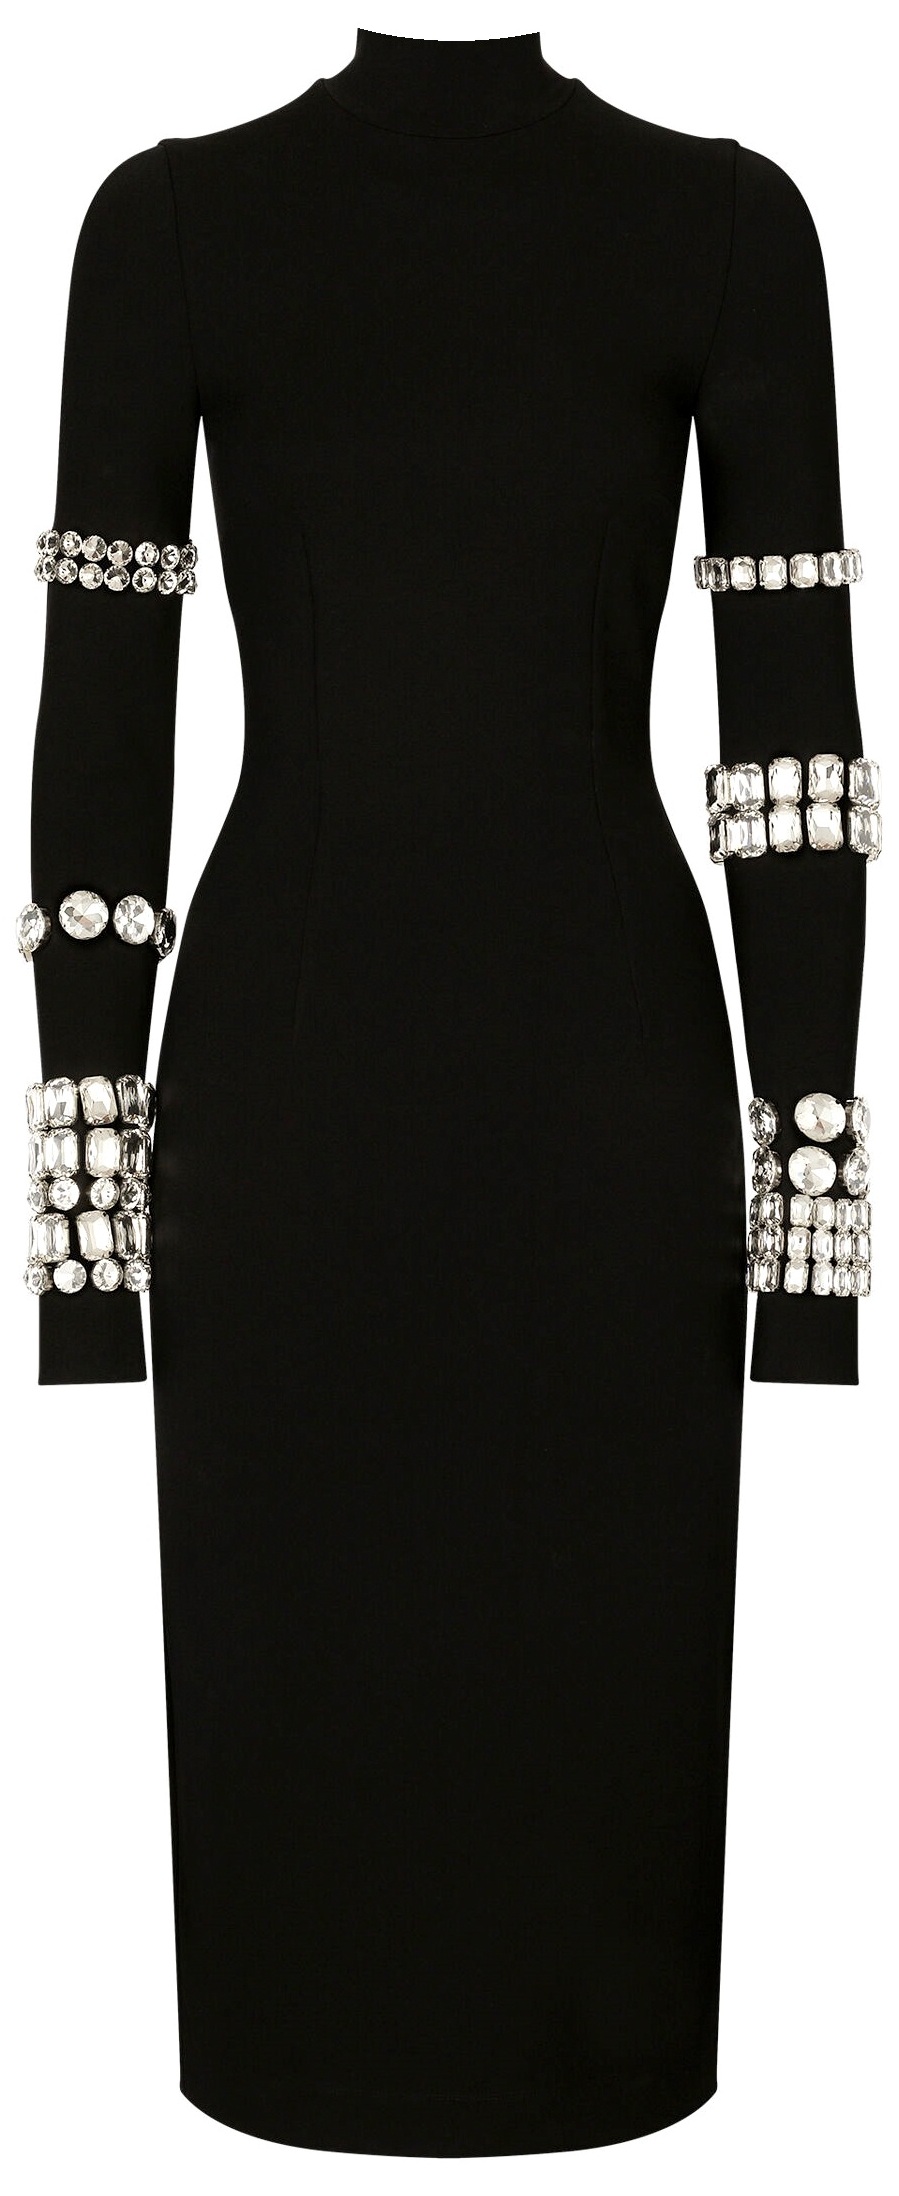 Black Calf-Length Stretchy Dress with Rhinestones - Designer Inspired ...